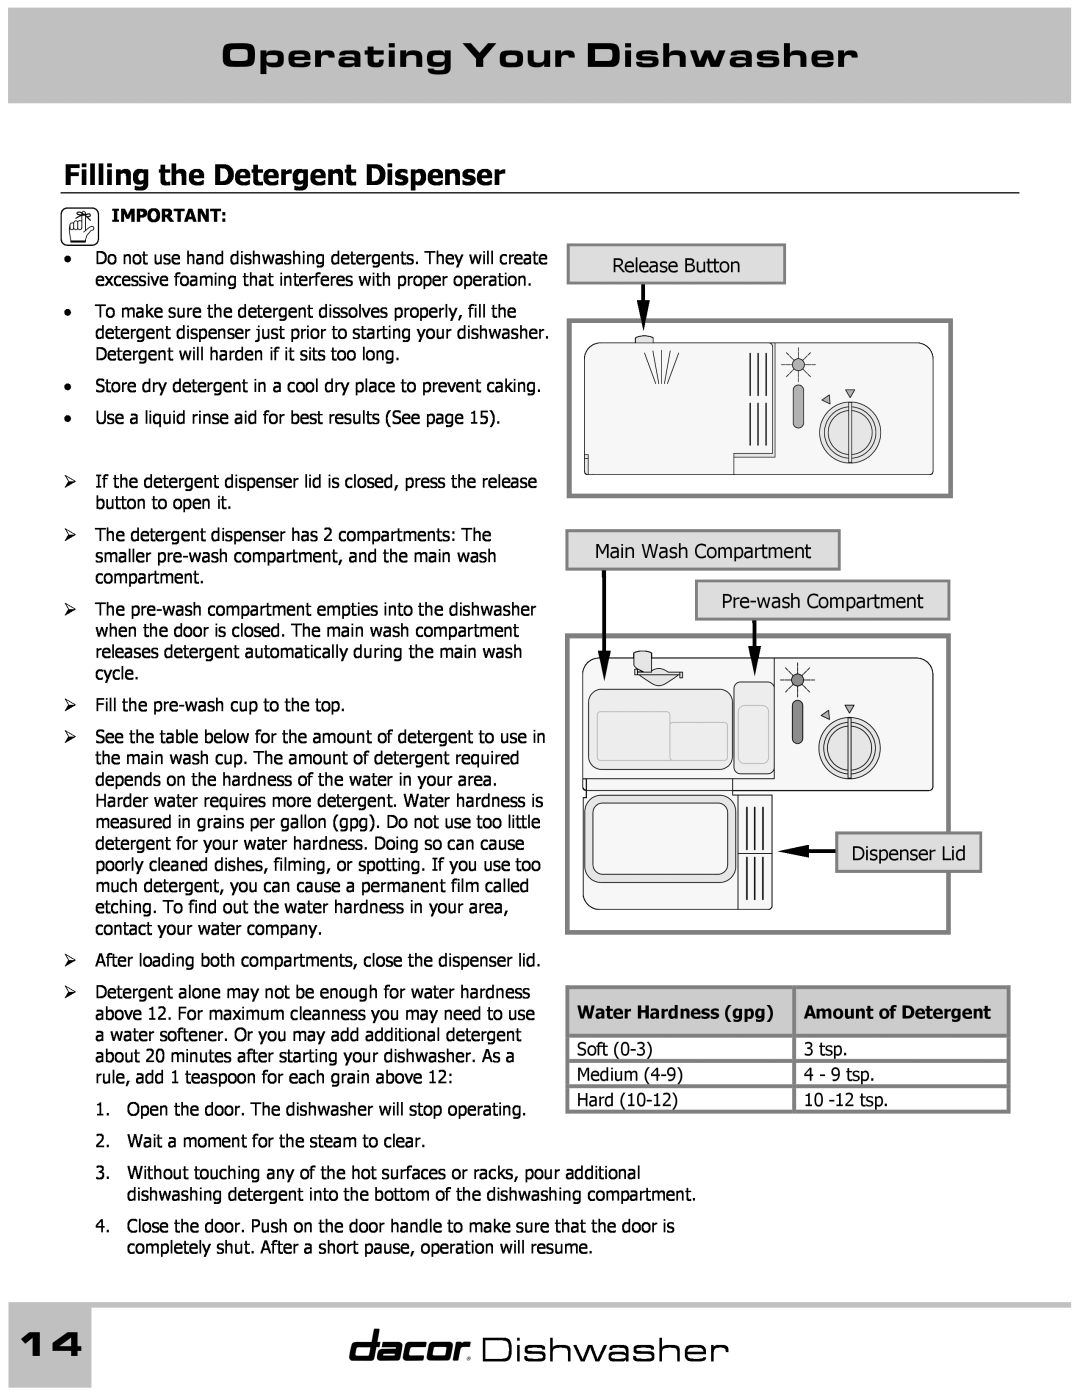 Dacor 65537 manual Operating Your Dishwasher, Filling the Detergent Dispenser, Dispenser Lid, Water Hardness gpg 